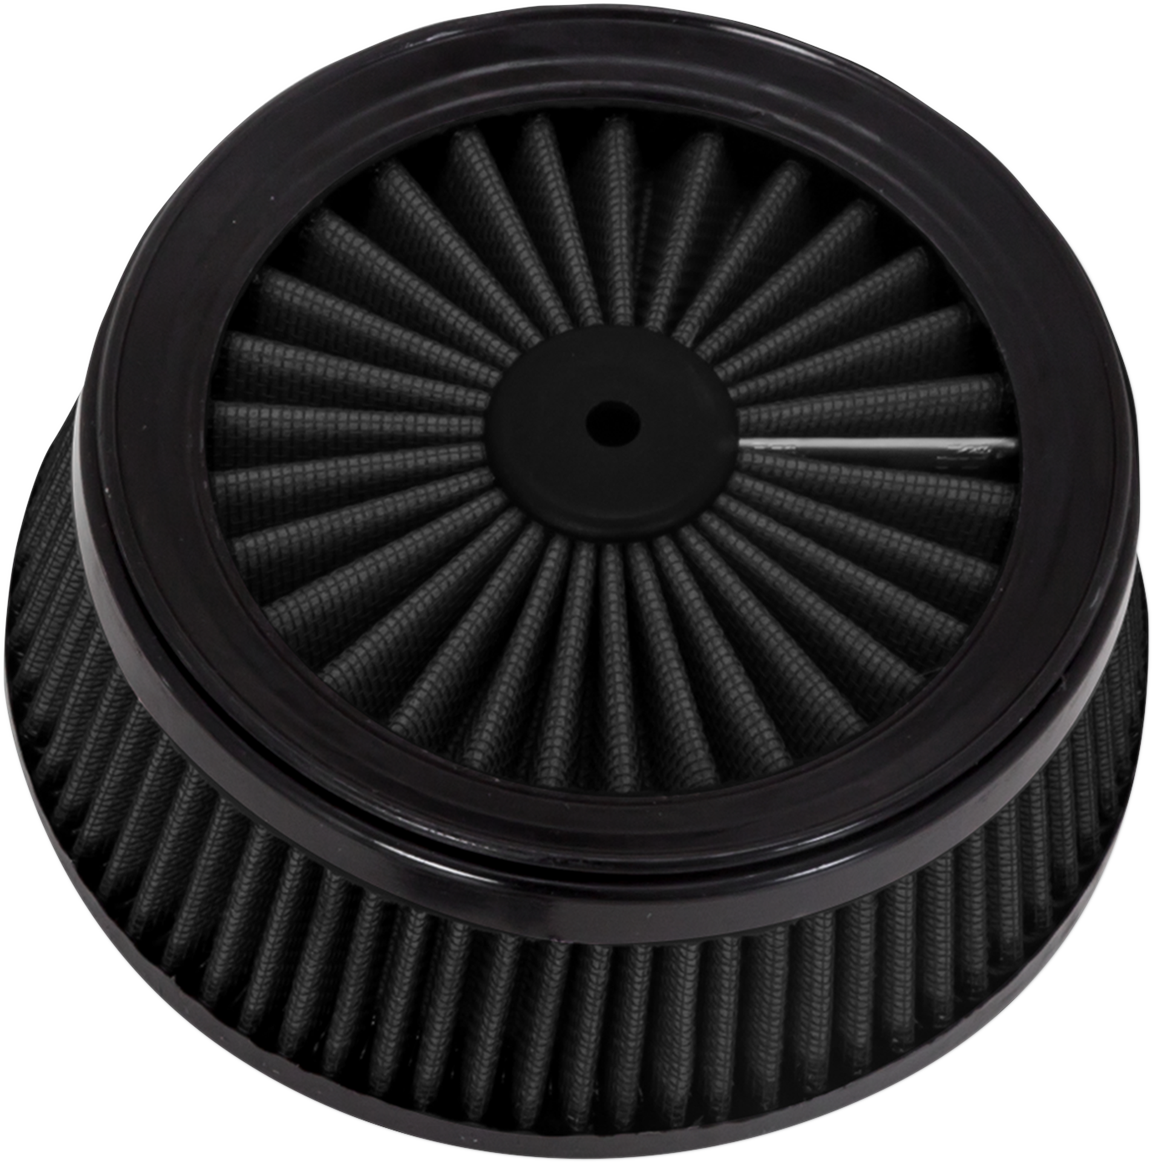 VANCE & HINES Replacement Air Filter - Black 23723